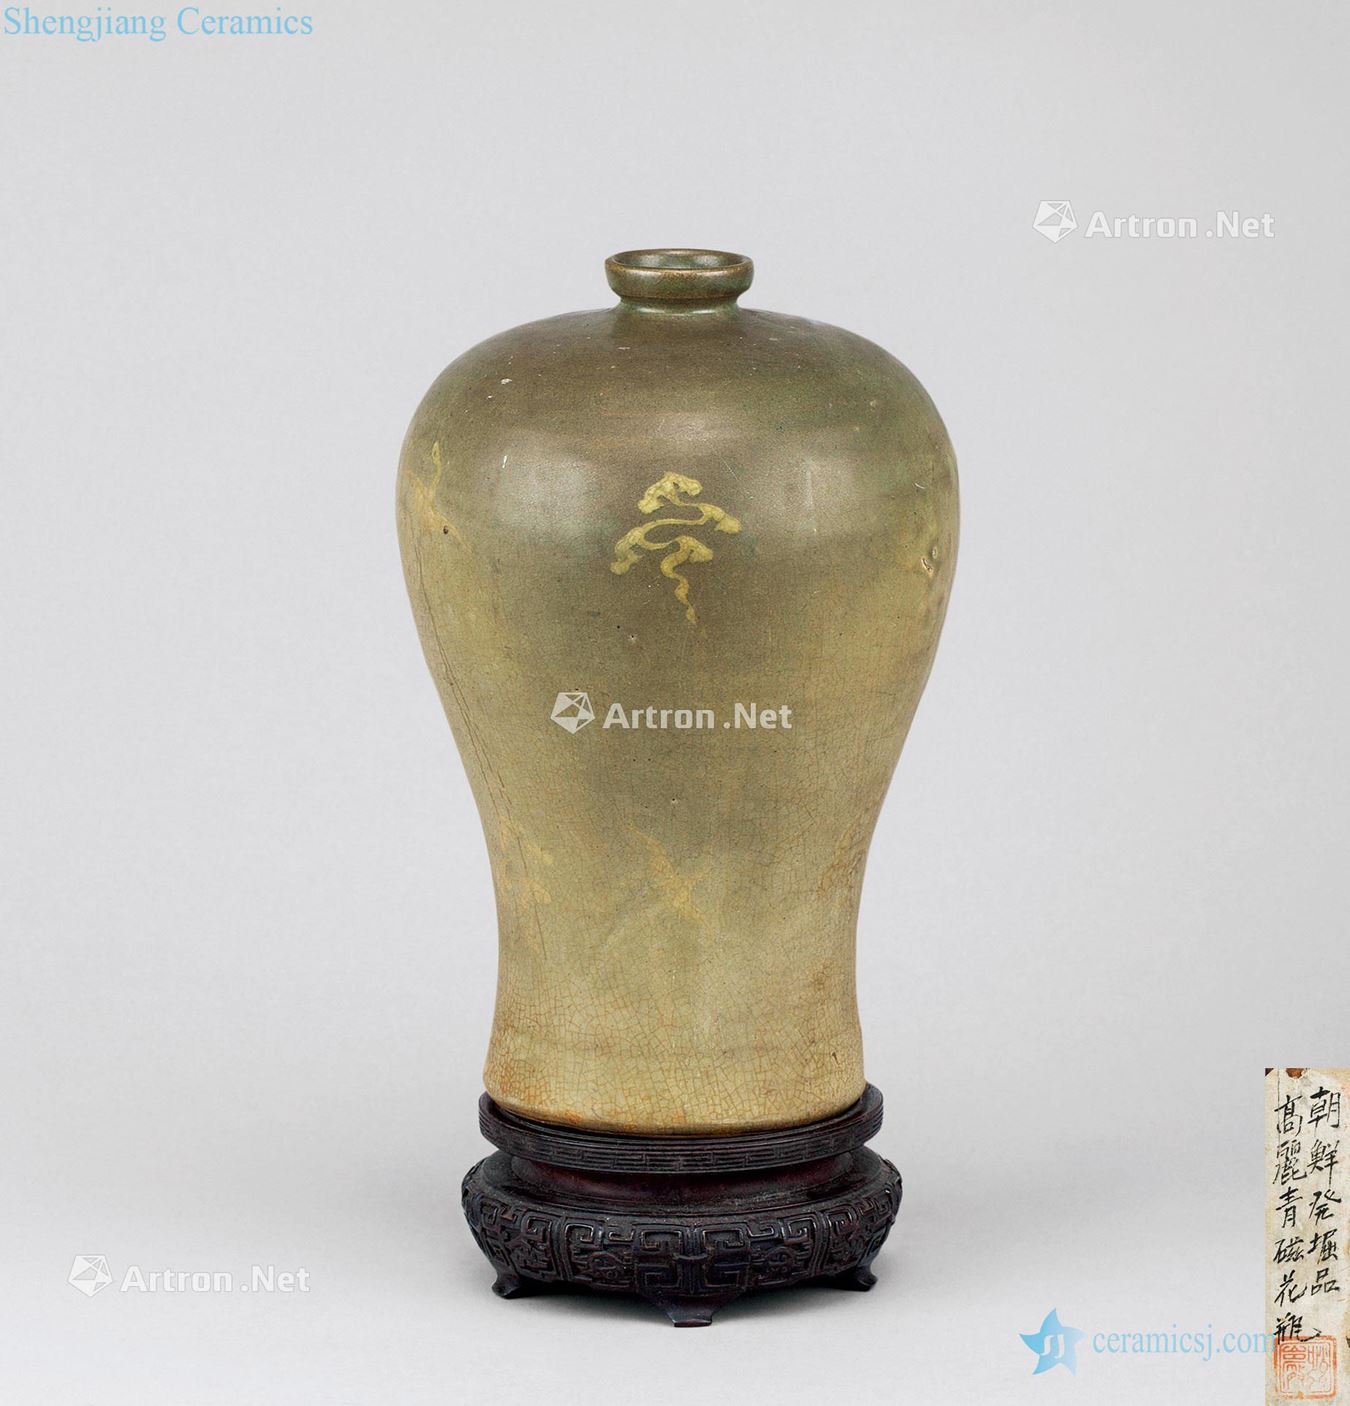 Koryo celadon mei yi dynasty (1392-1910)